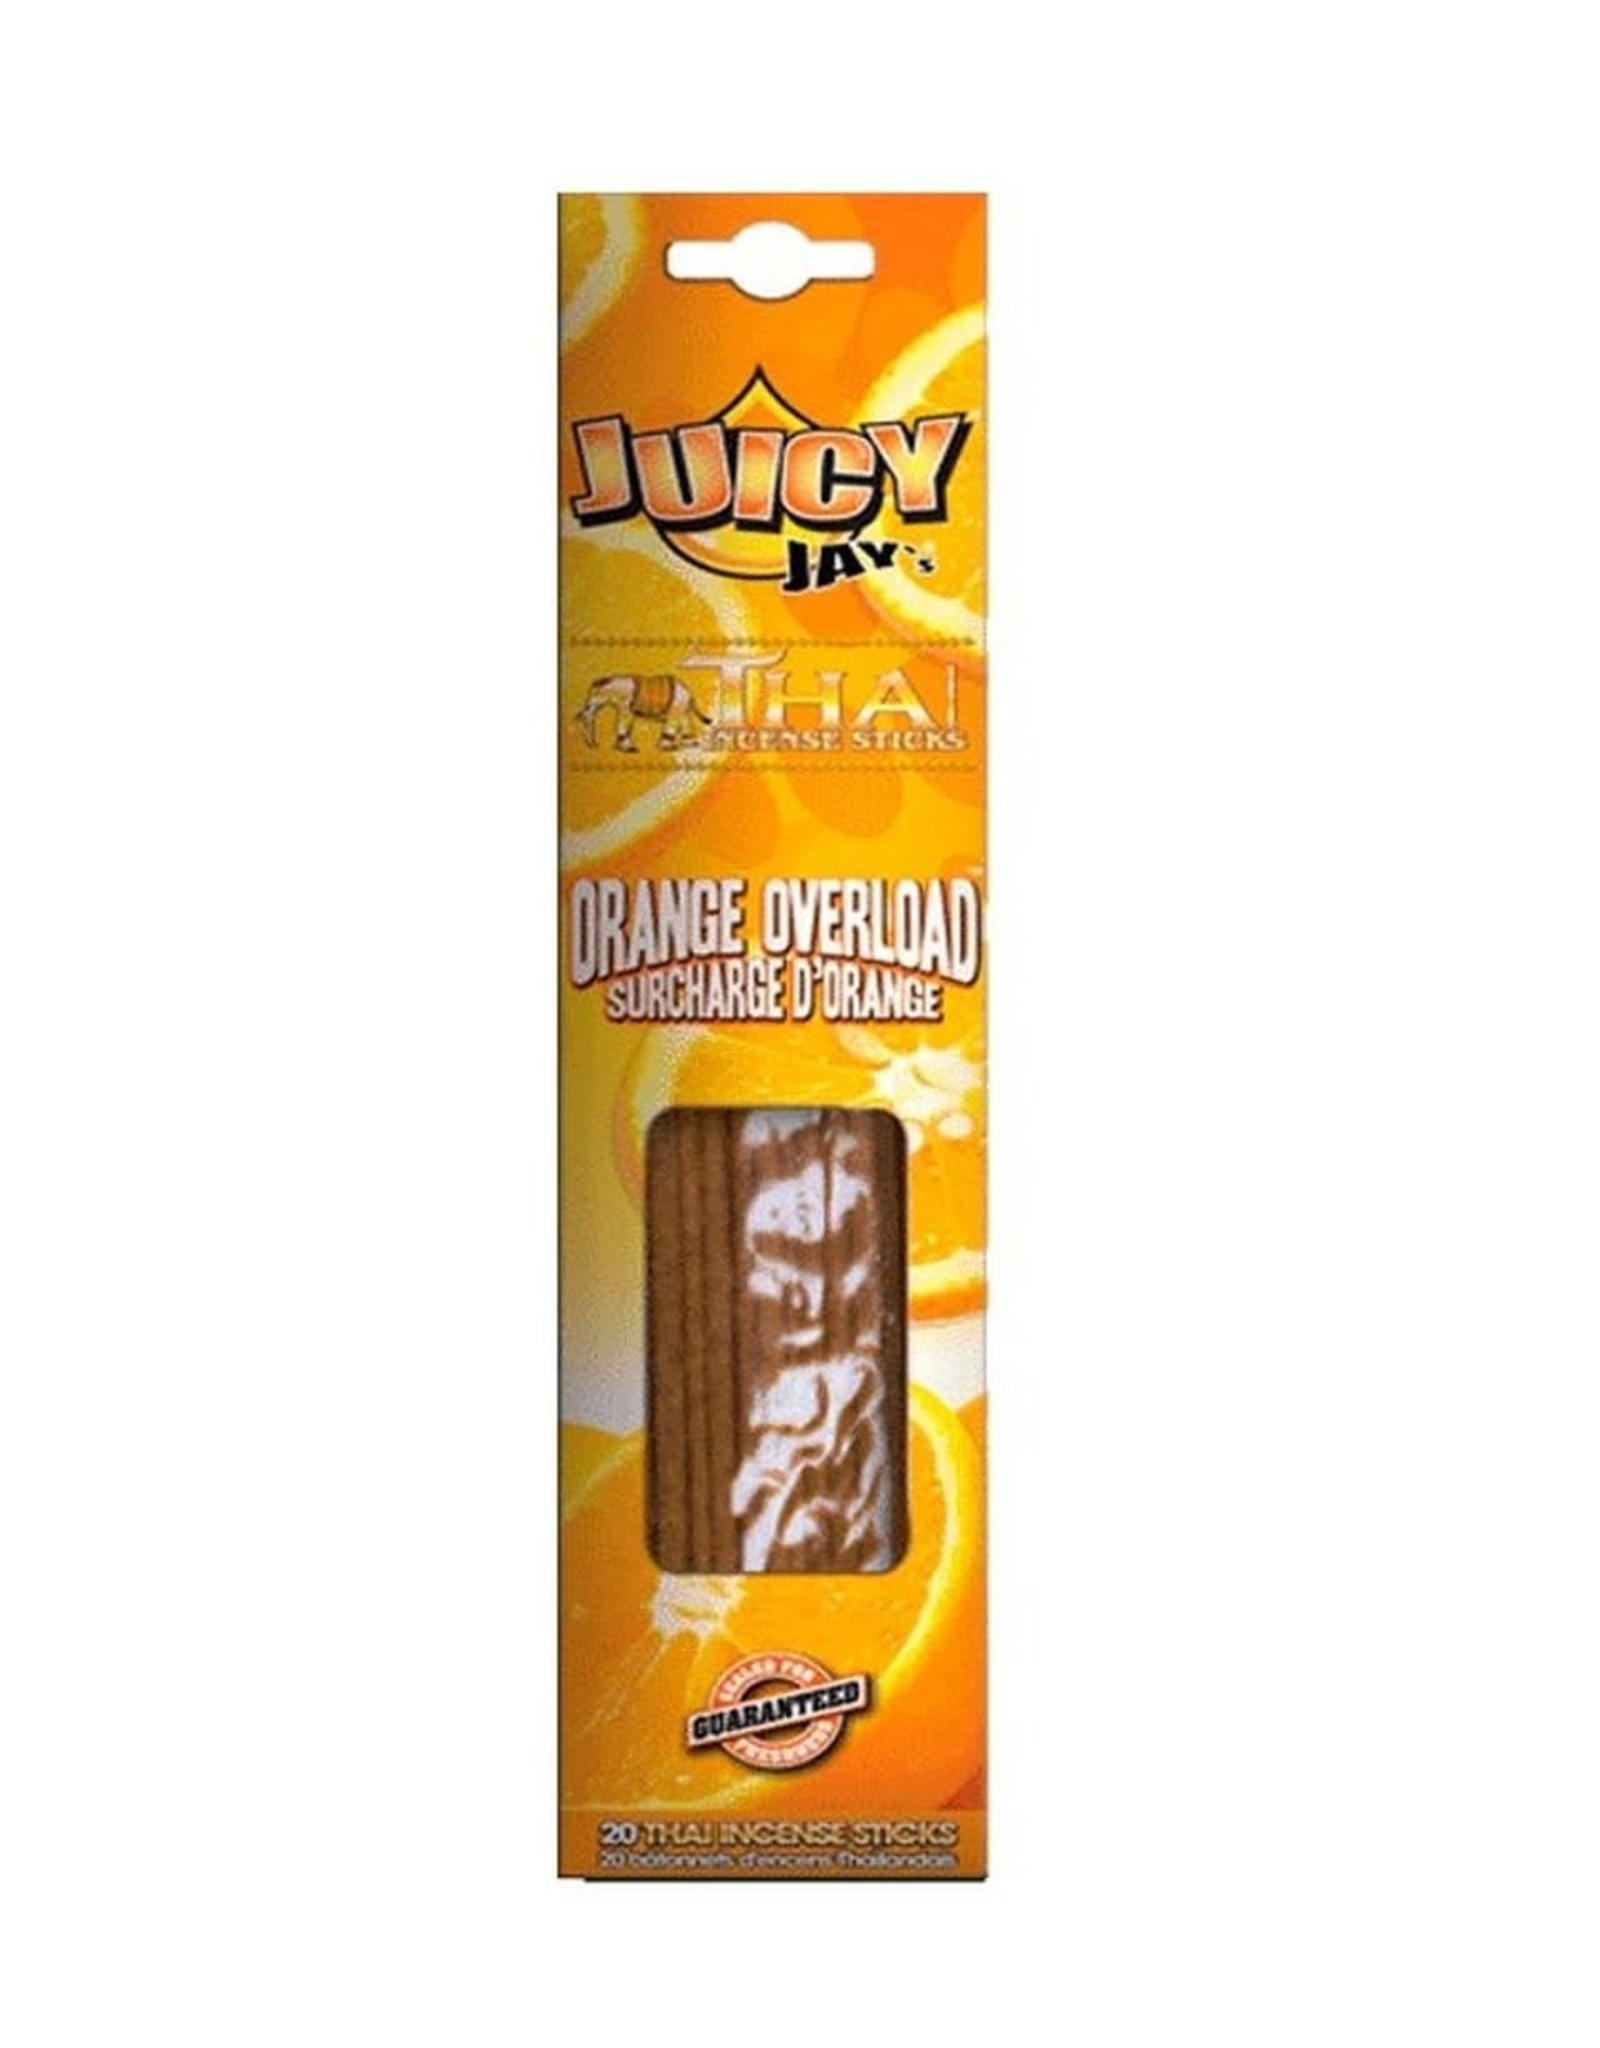 Juicy Jay's Juicy Incense - Orange Overload